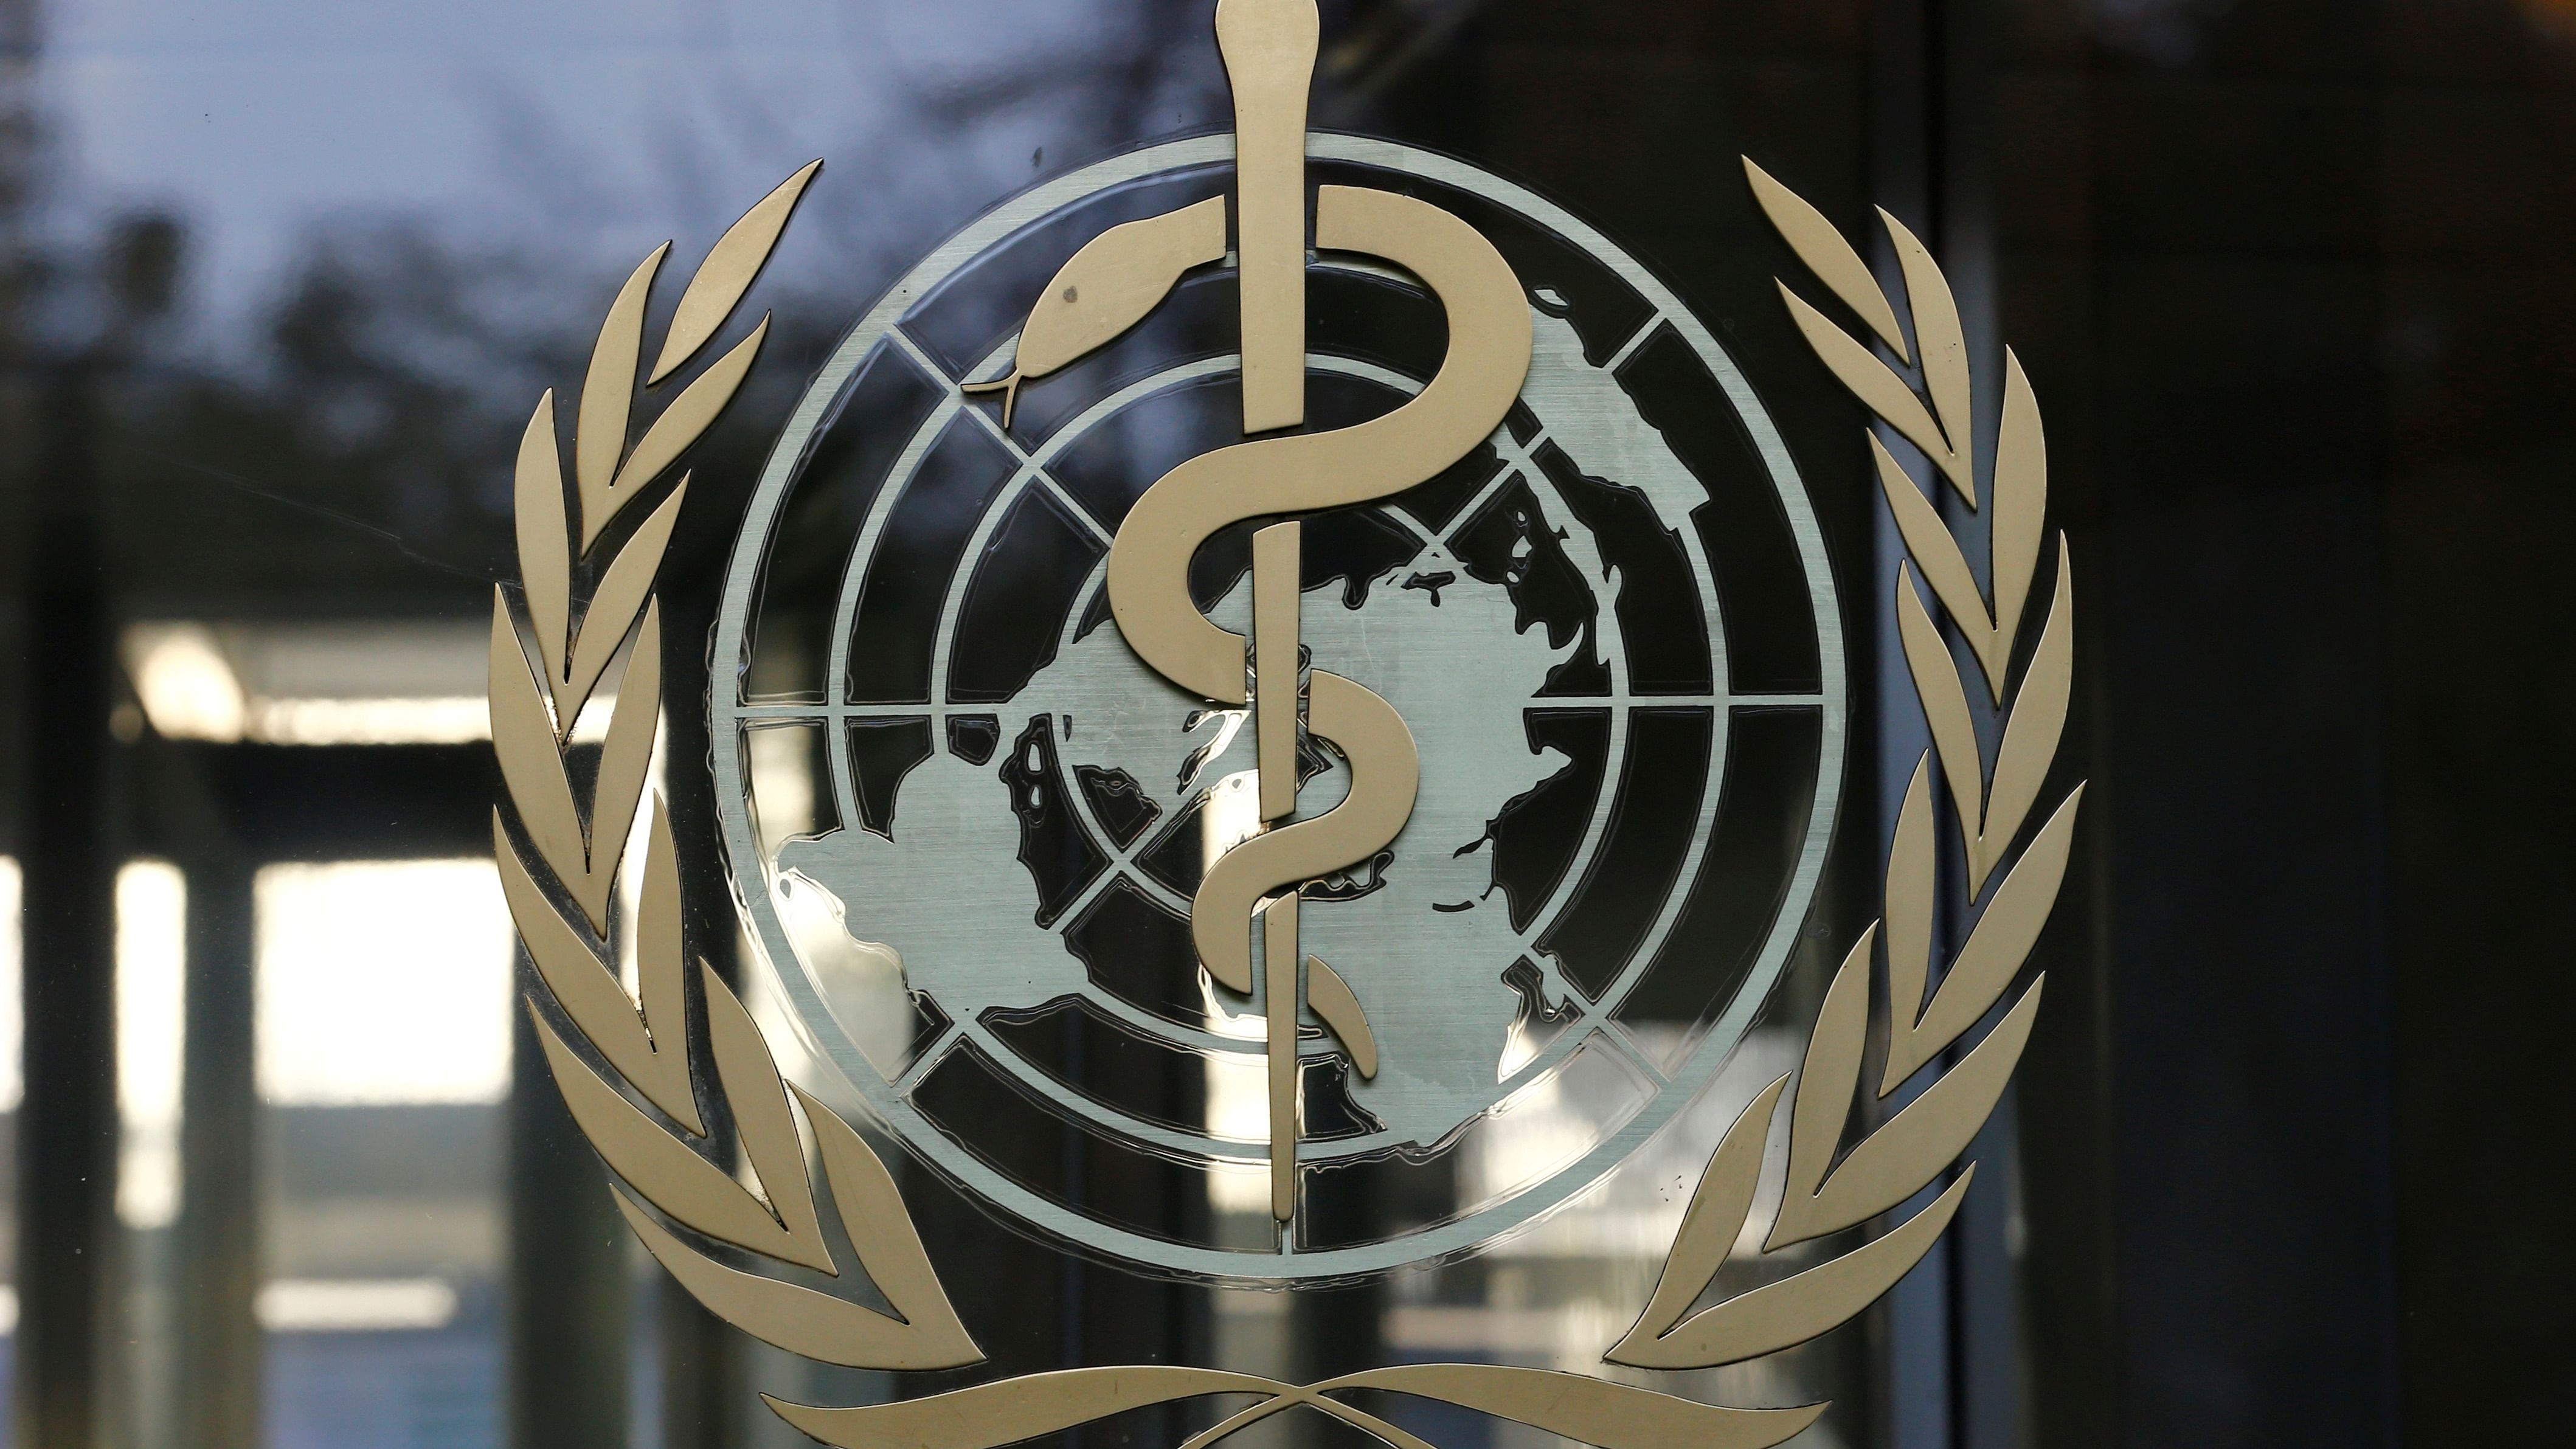 World Health Organisation. Credit: Reuters Photo